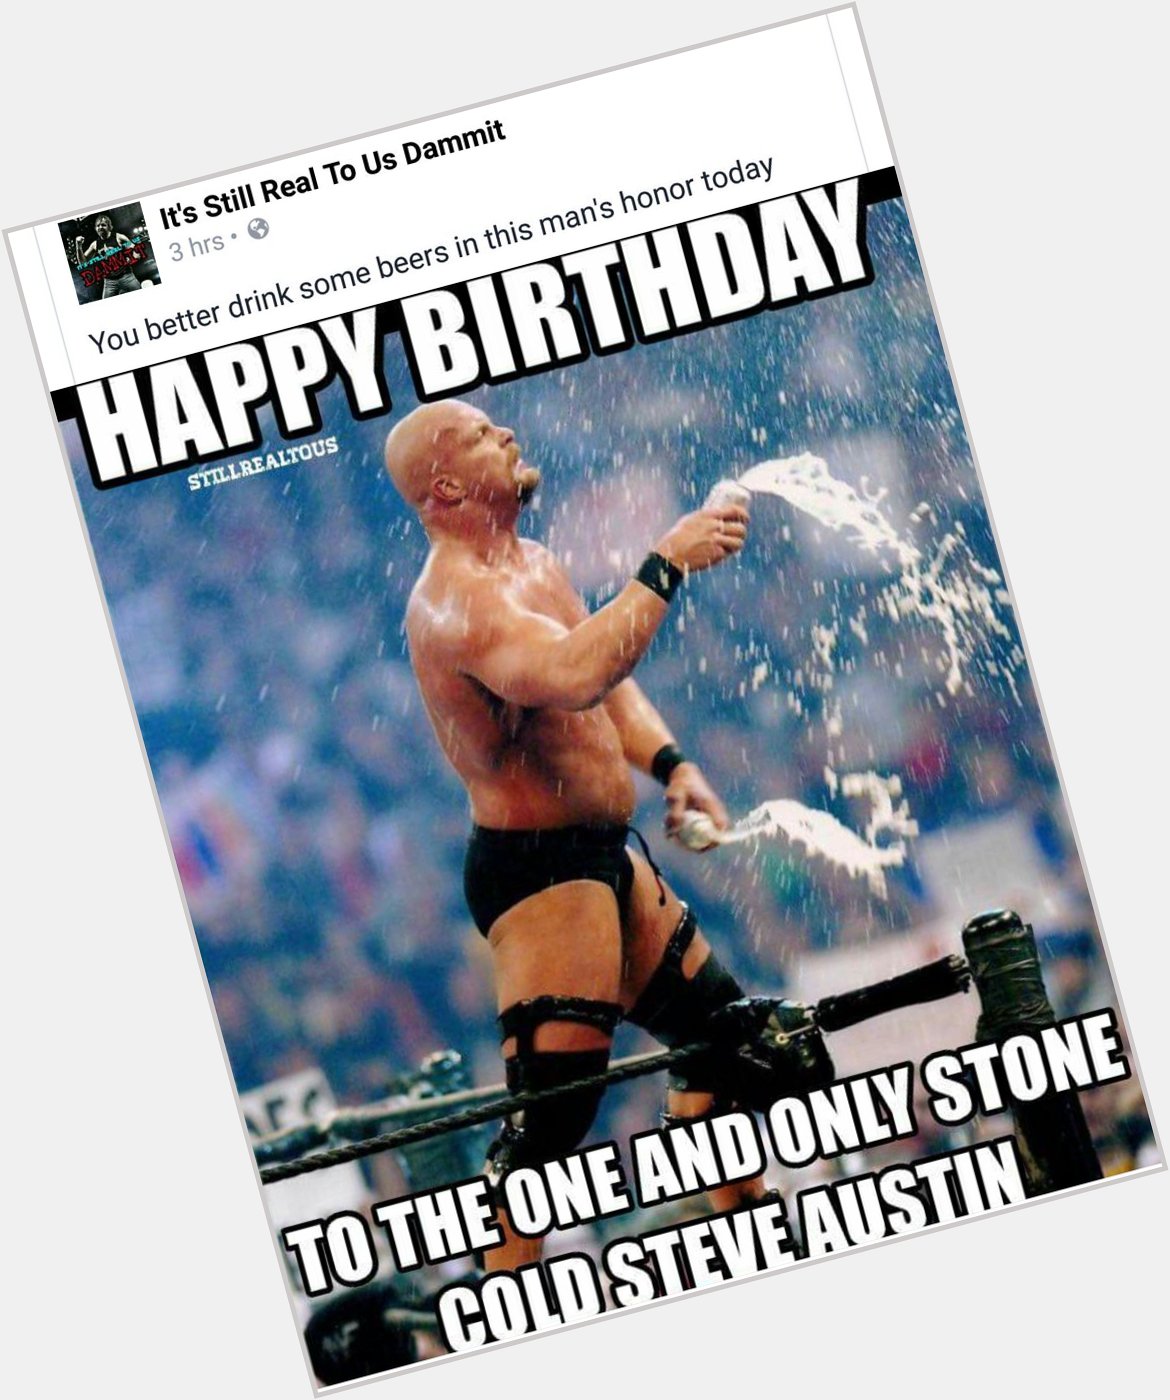 Happy birthday to my favorite wrestler Stone Cold Steve Austin 